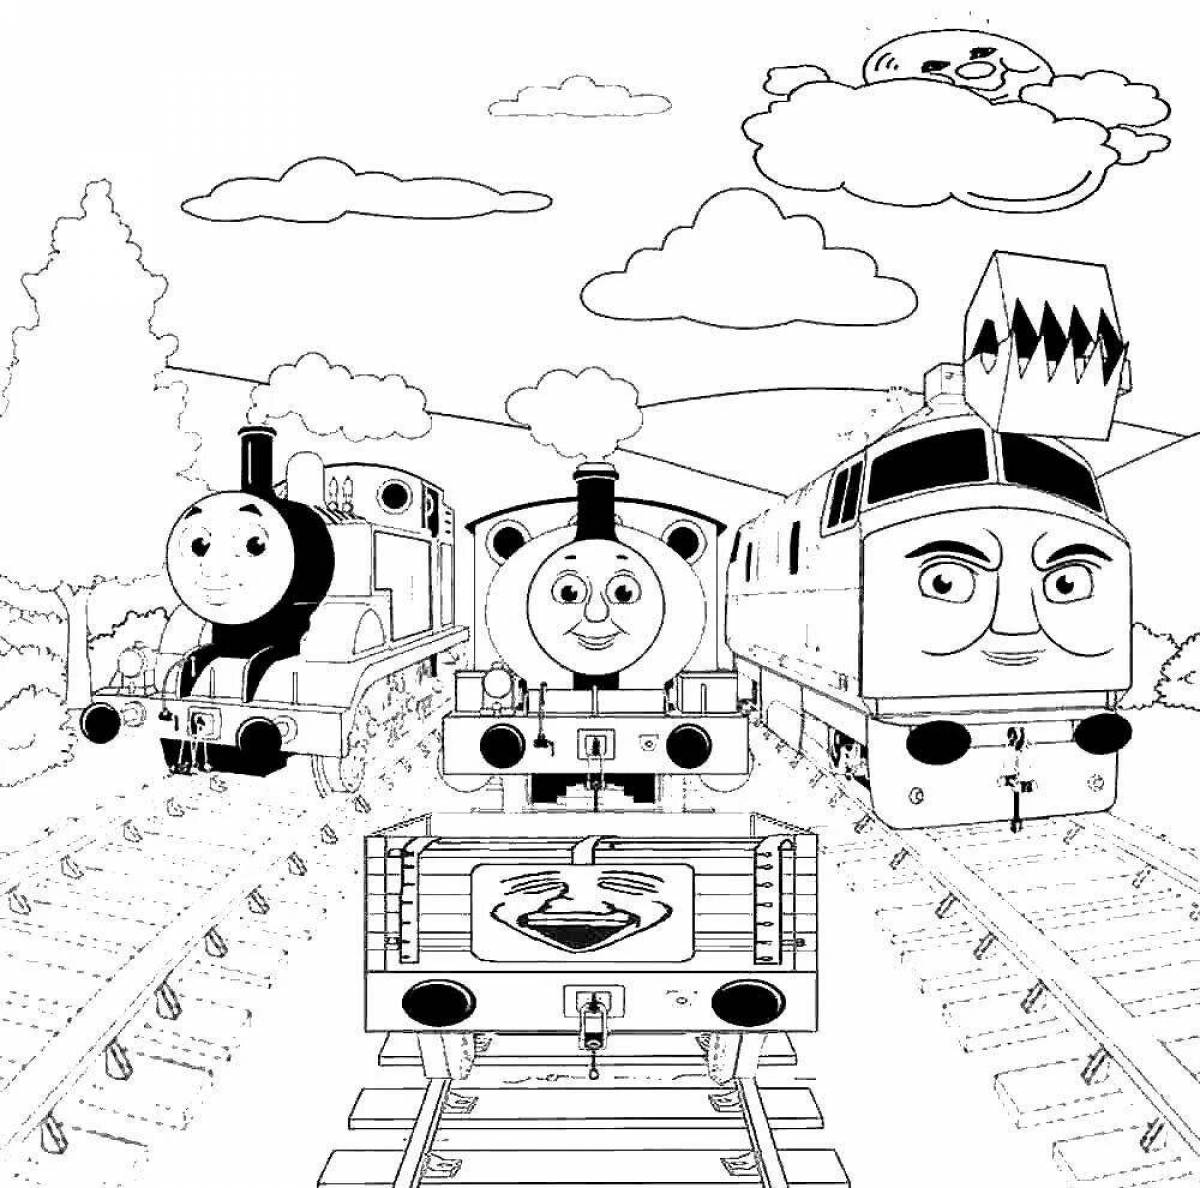 Monumental locomotives and trains